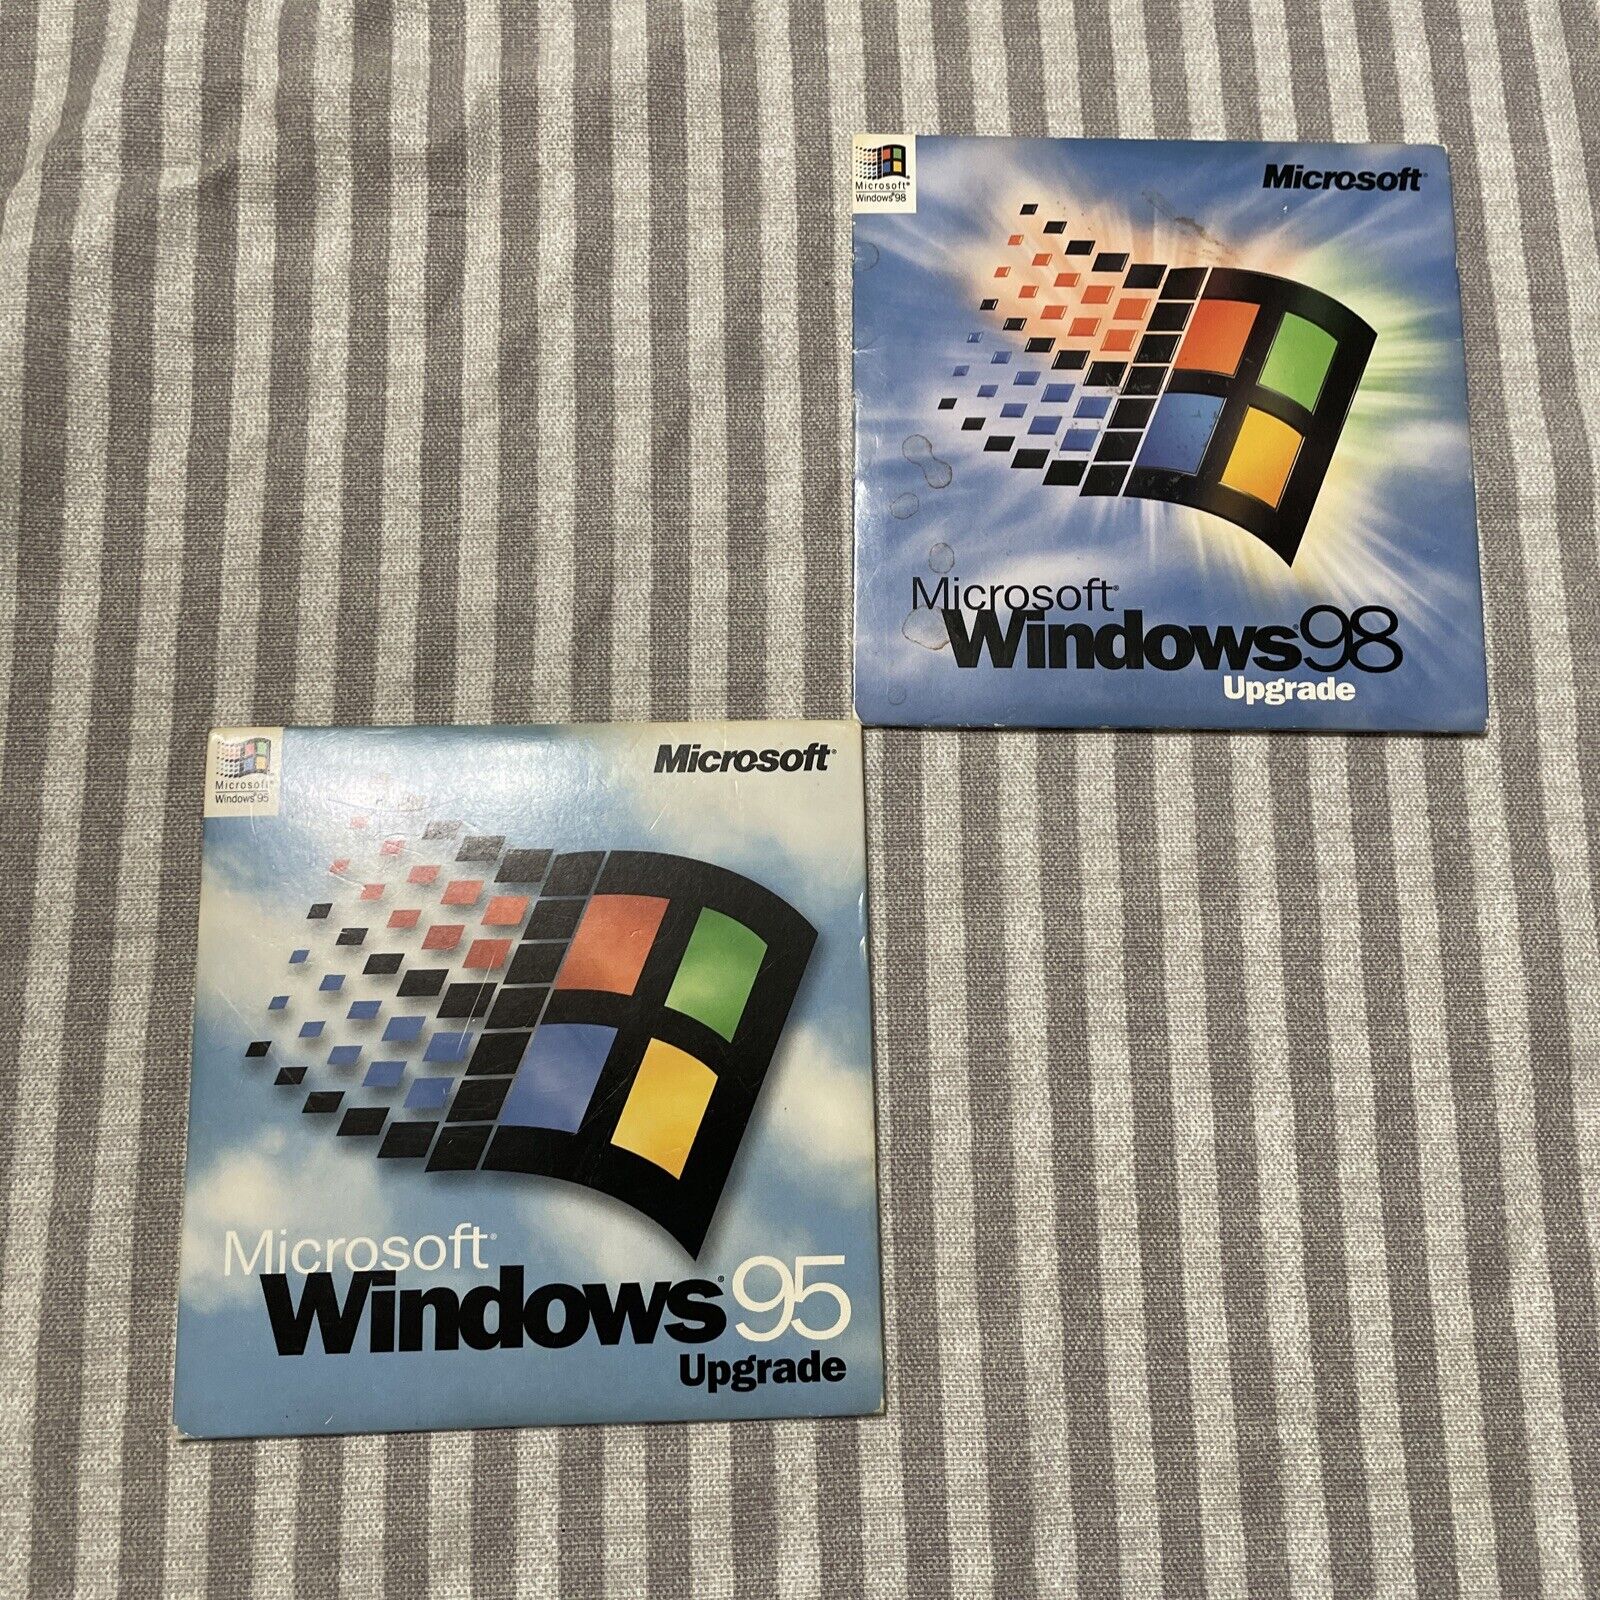 Microsoft Windows 95 Upgrade Disc & Windows 98 Upgrade Disk Both Unopened